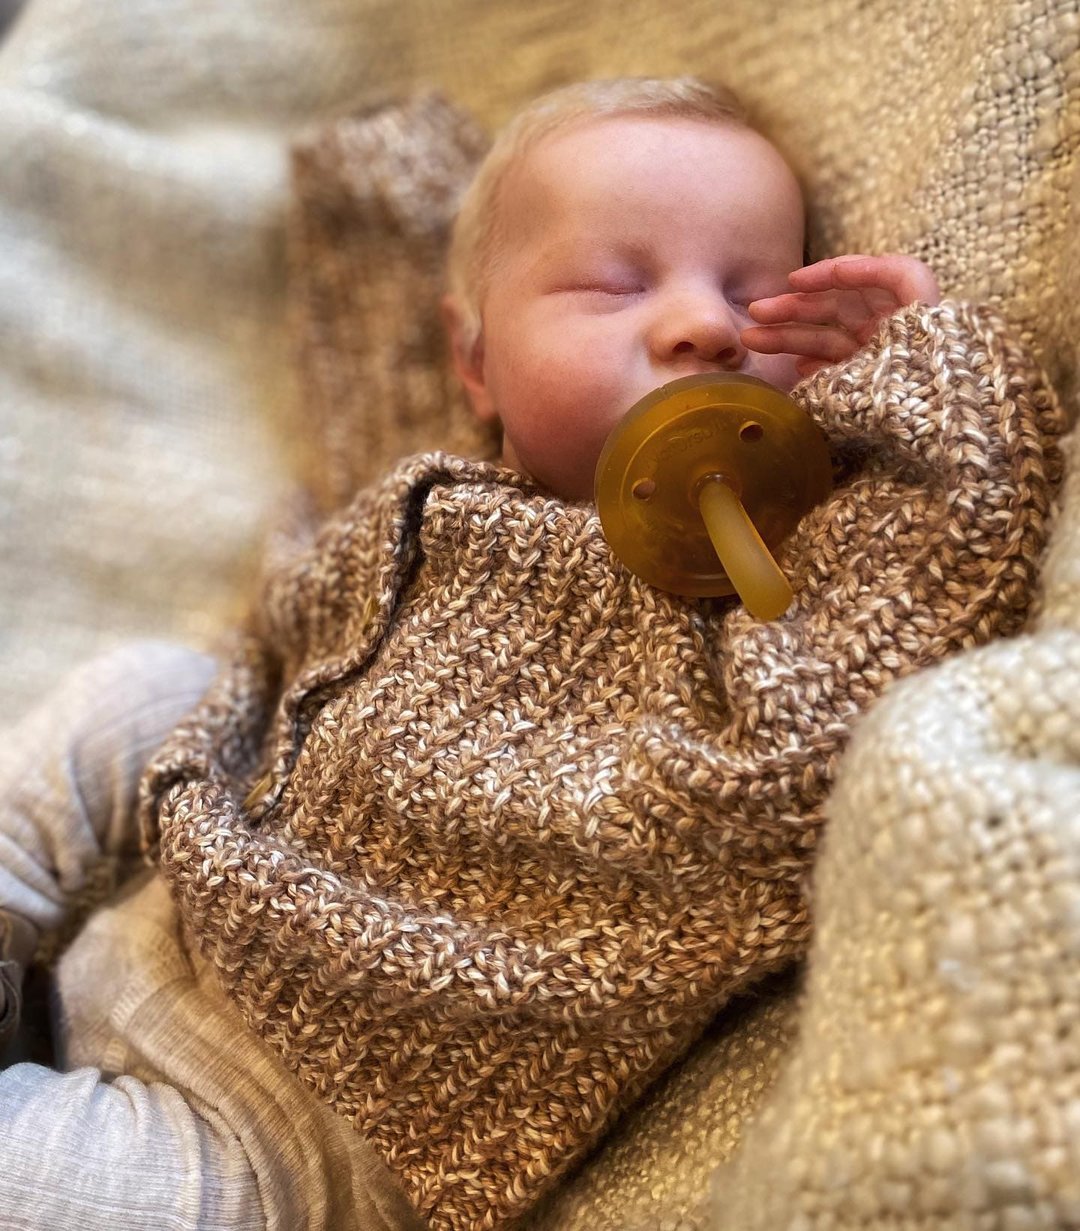 12” Newborn Sleeping Baby Preemie Handmade Soft Reborn Baby Doll Boy Named Russell